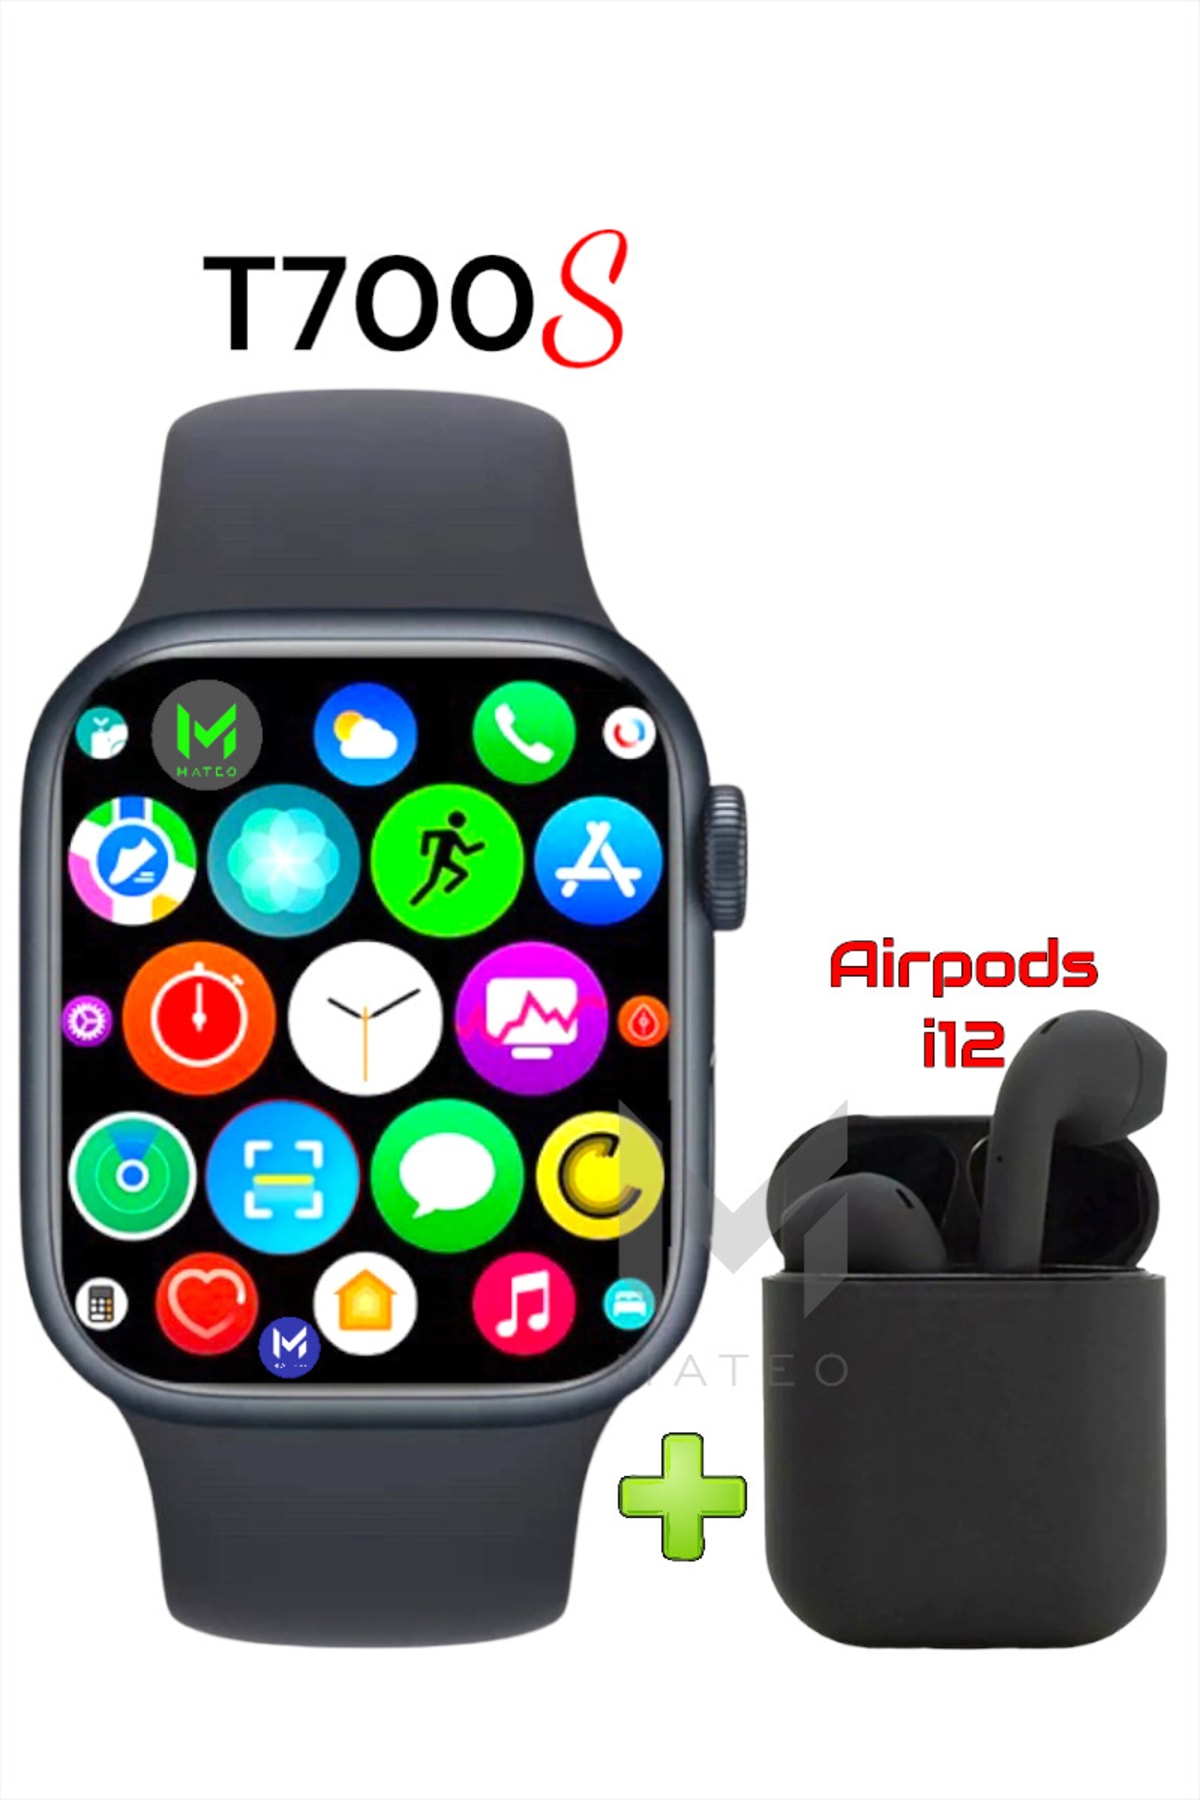 MATEO Akıllı Saat T700s + Airpods I12 Uyumlu Kablosuz Kulaklık Ikili Siyah Set Ios Android Smartwatch